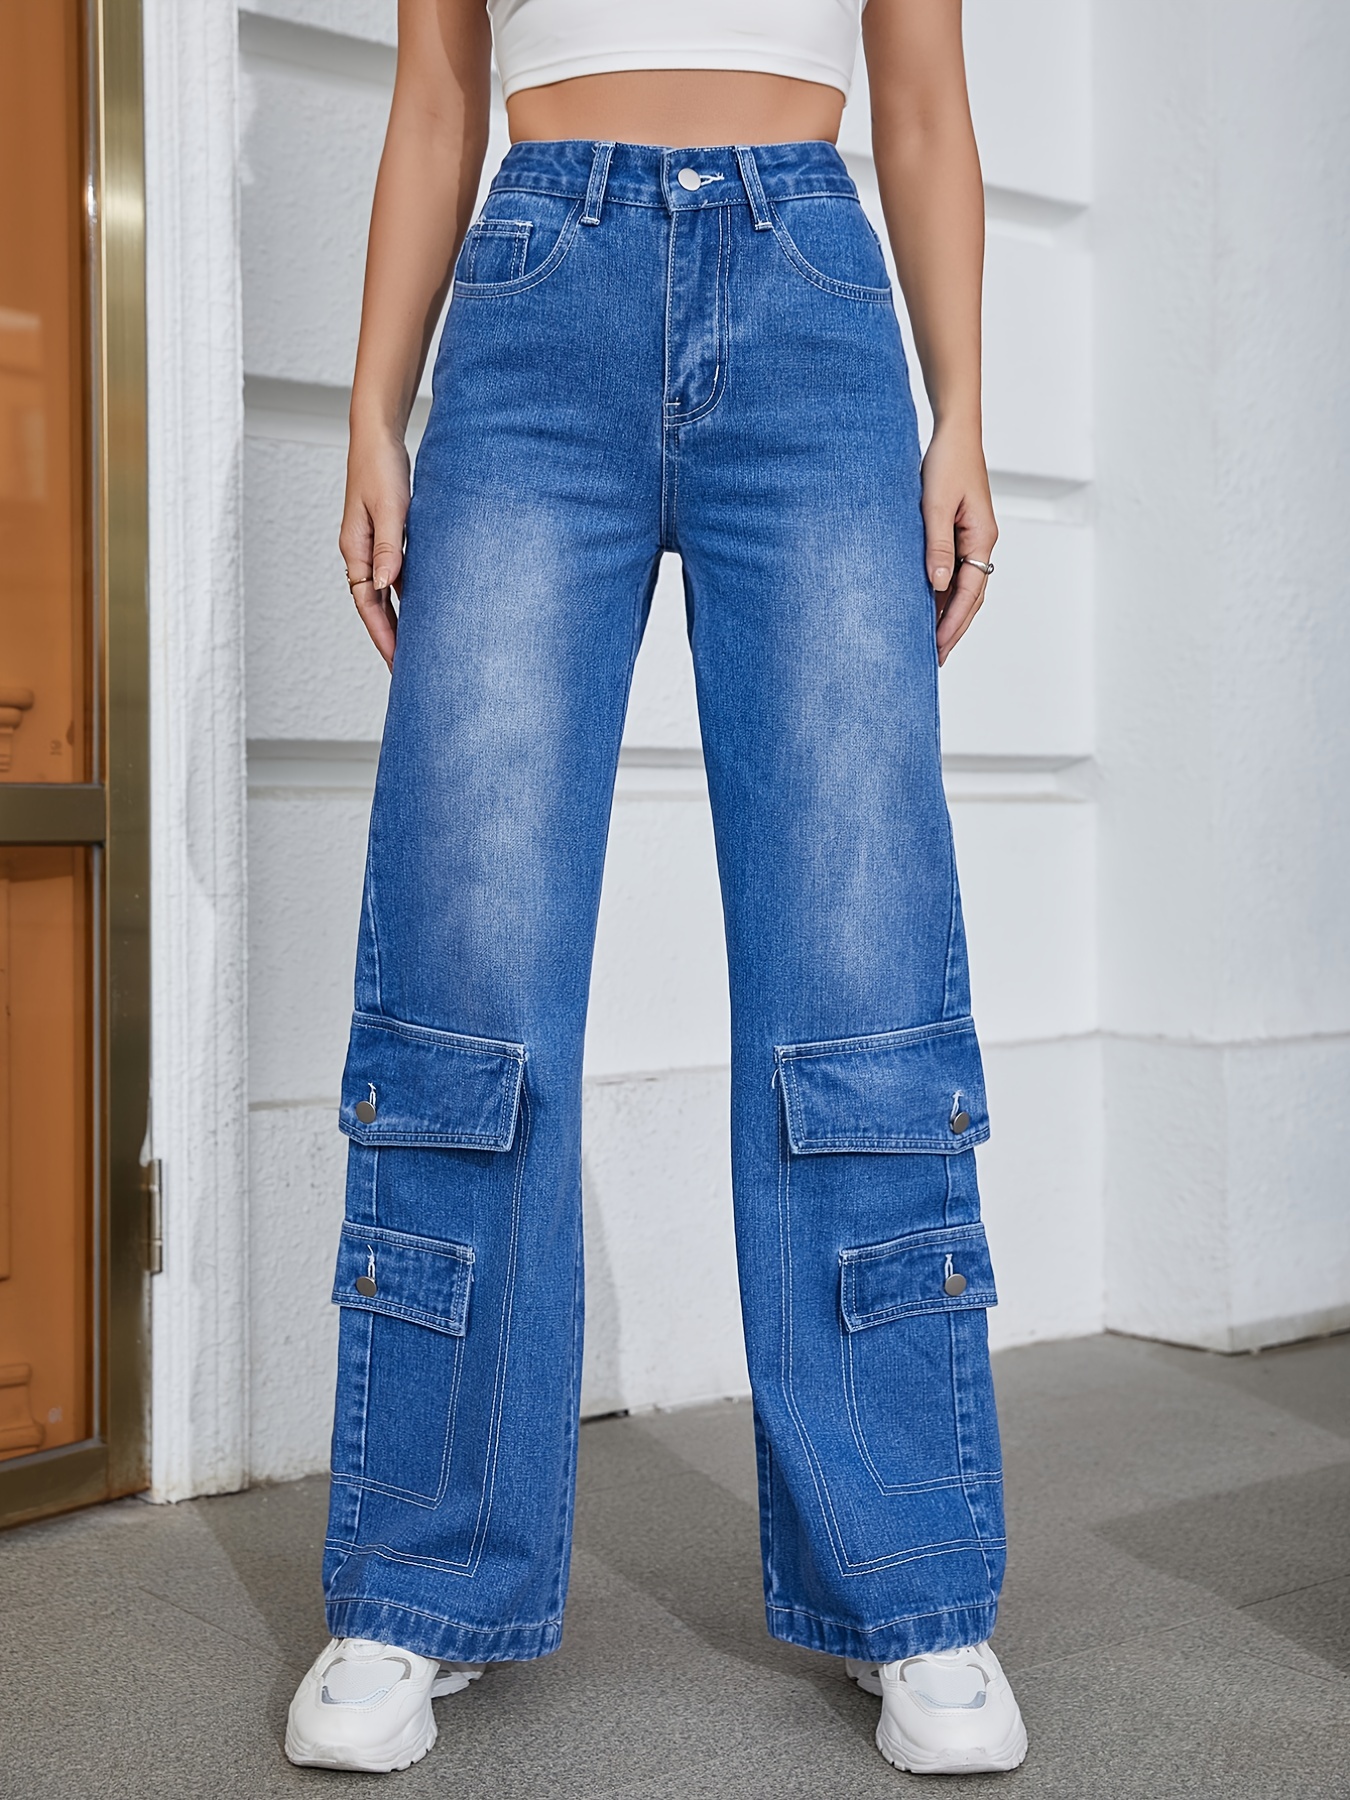 CRUZ pana W32 L32 gris denim pantalones de cintura alta vintage 90s jeans  pantalones rectos pierna botón mosca mujeres L Grande -  México